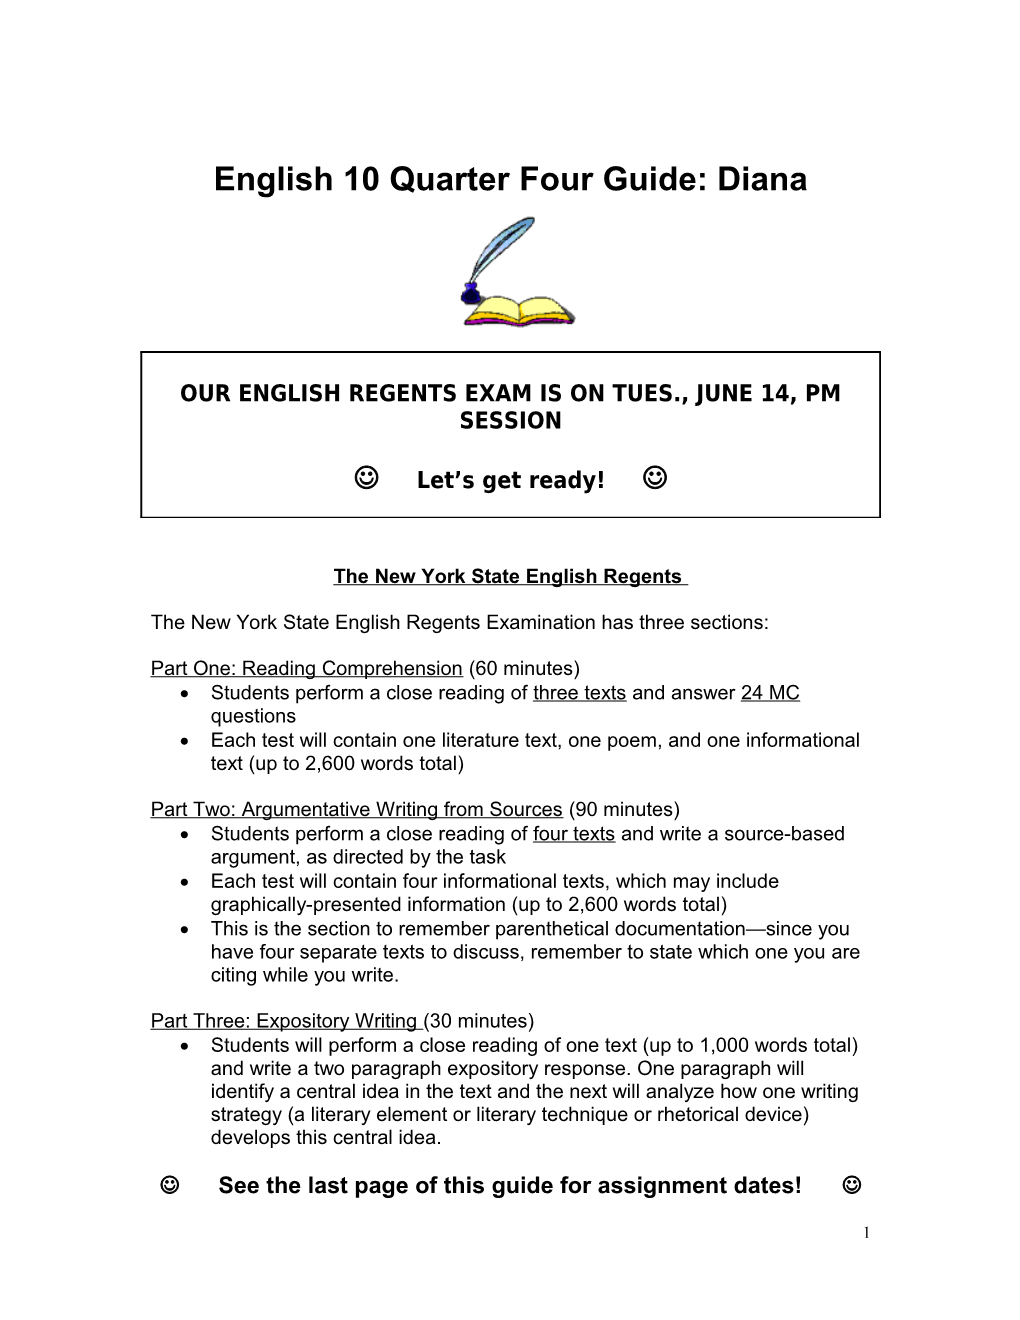 English 10 Thematic Units: Diana